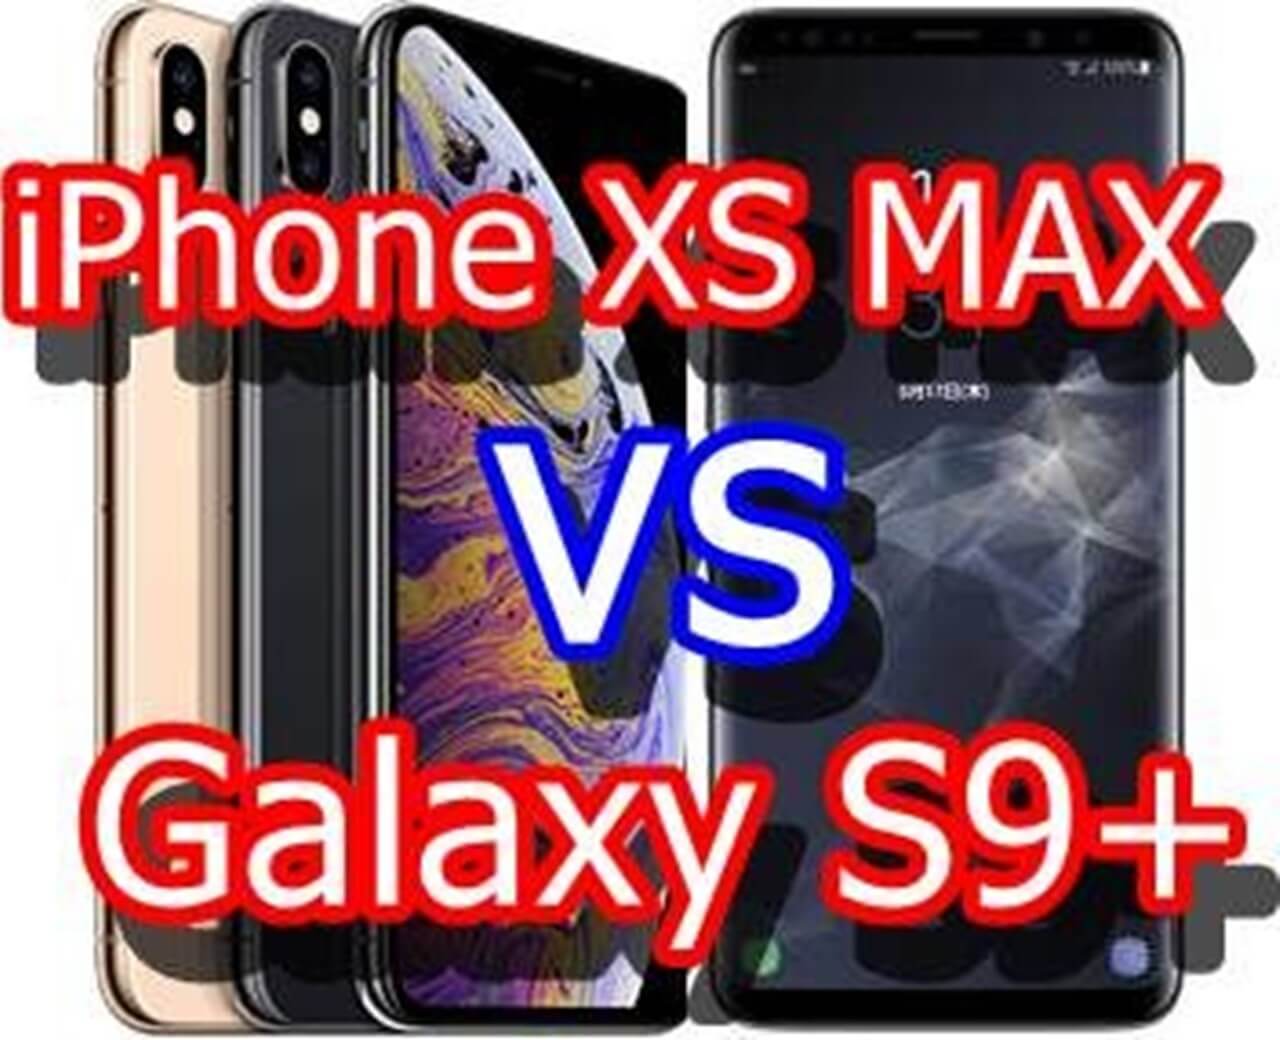 iPhone XS MAXとGalaxy S9+